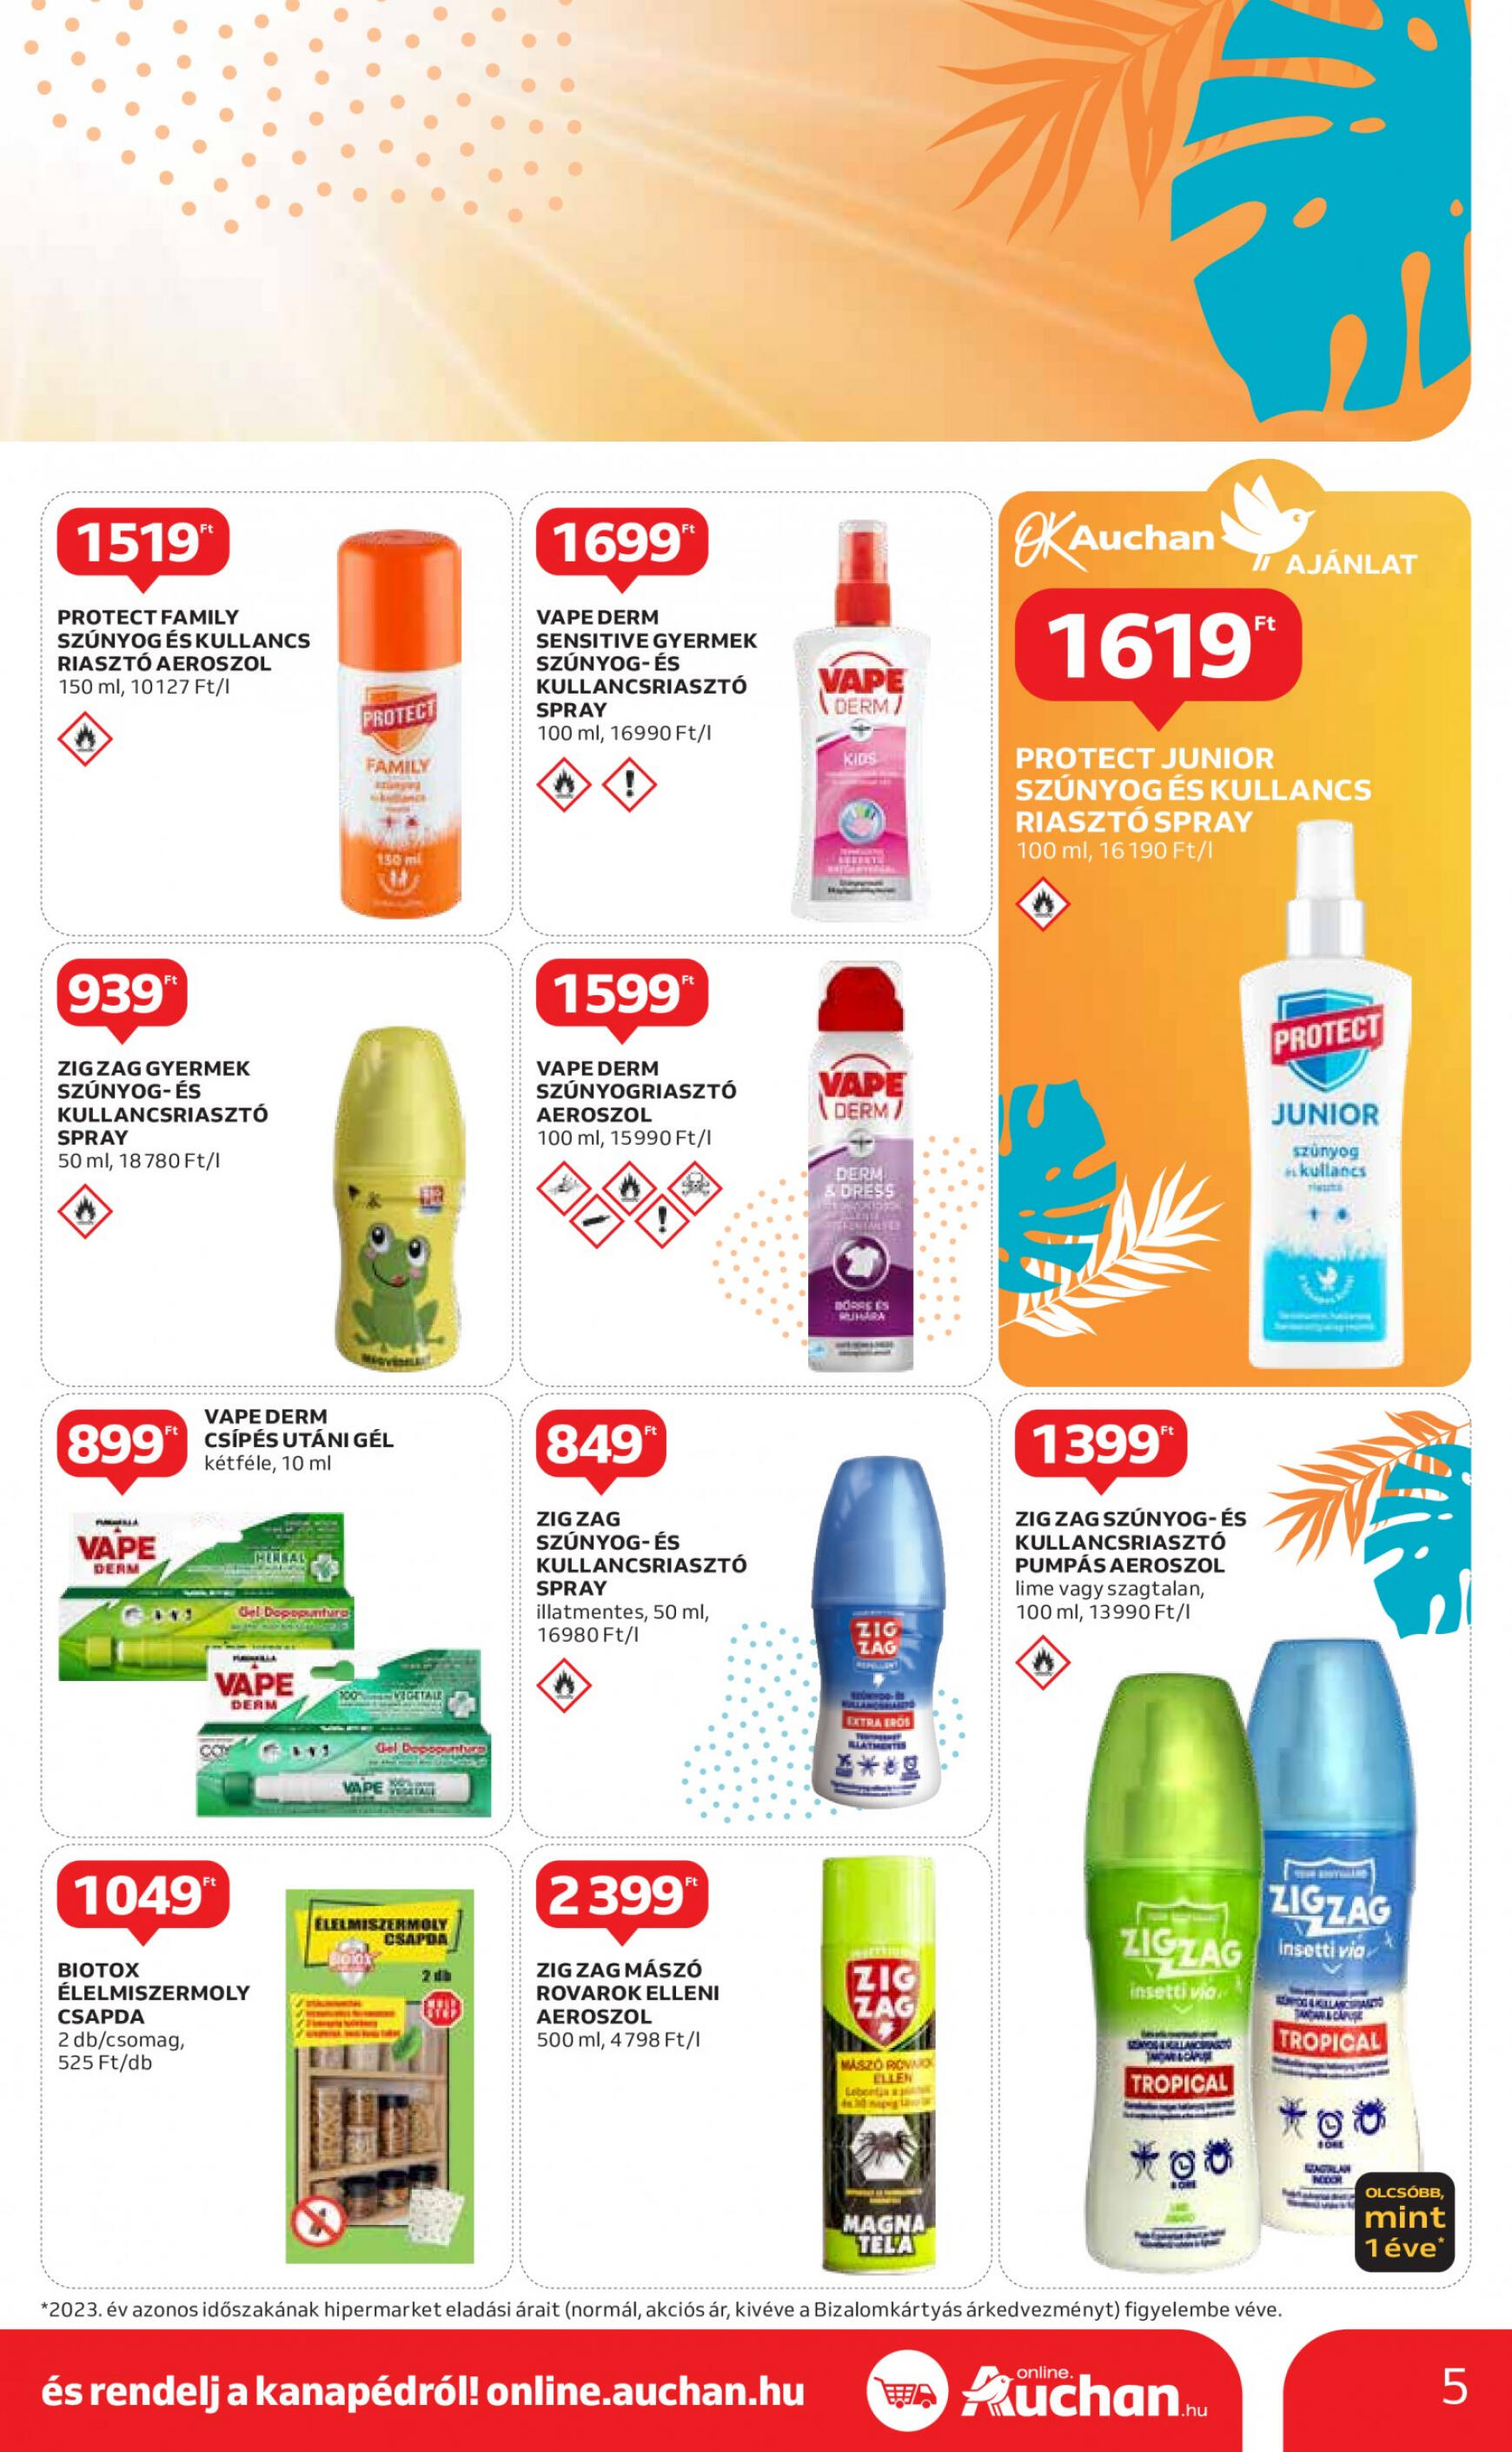 auchan - Aktuális újság Auchan 06.13. - 06.26. - page: 5